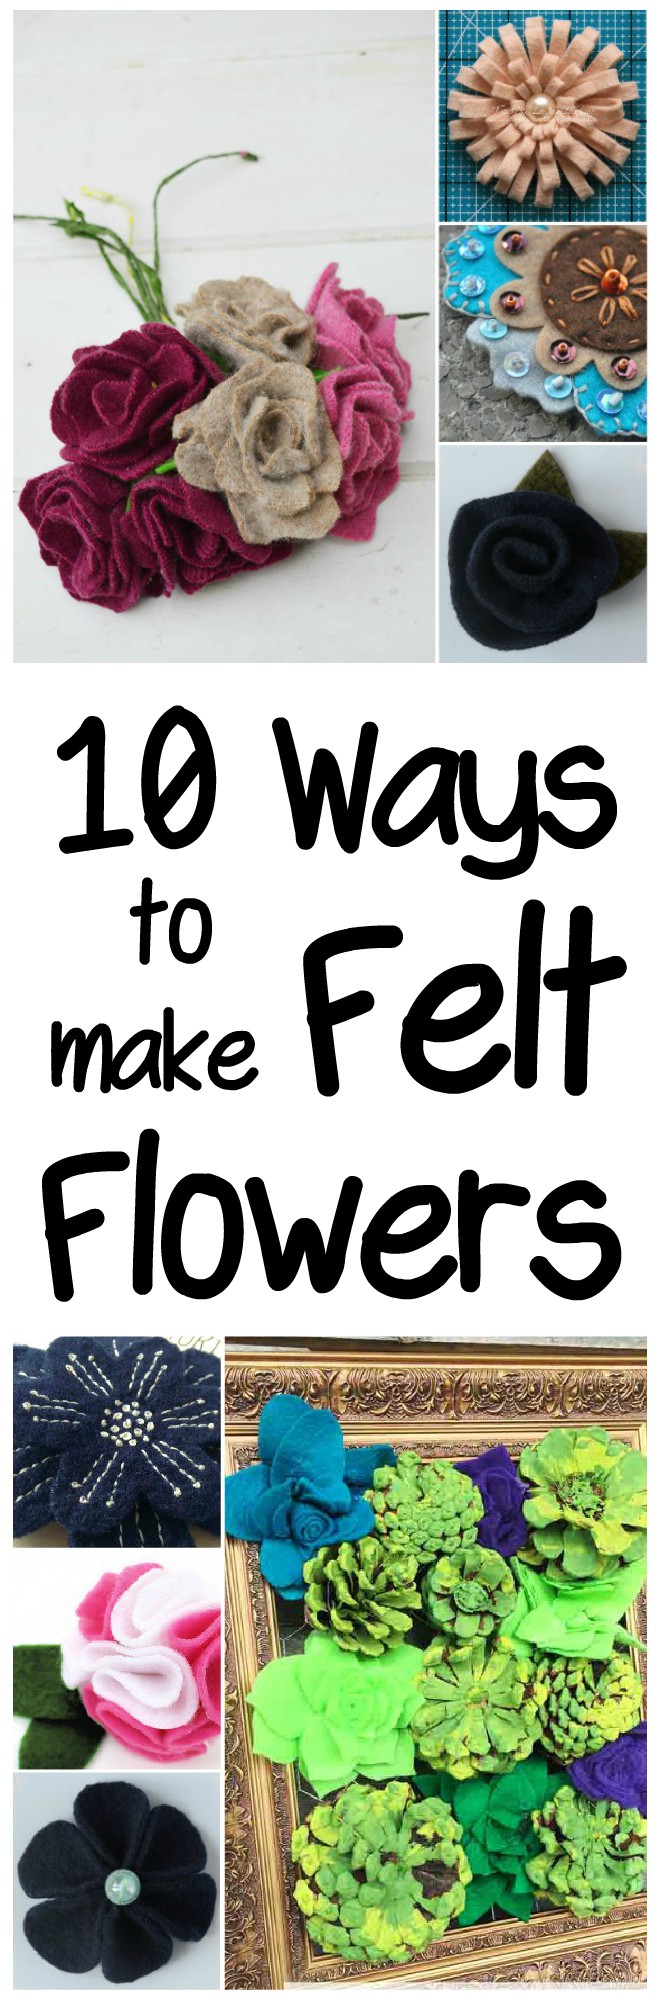 10 ways to make felt flowers